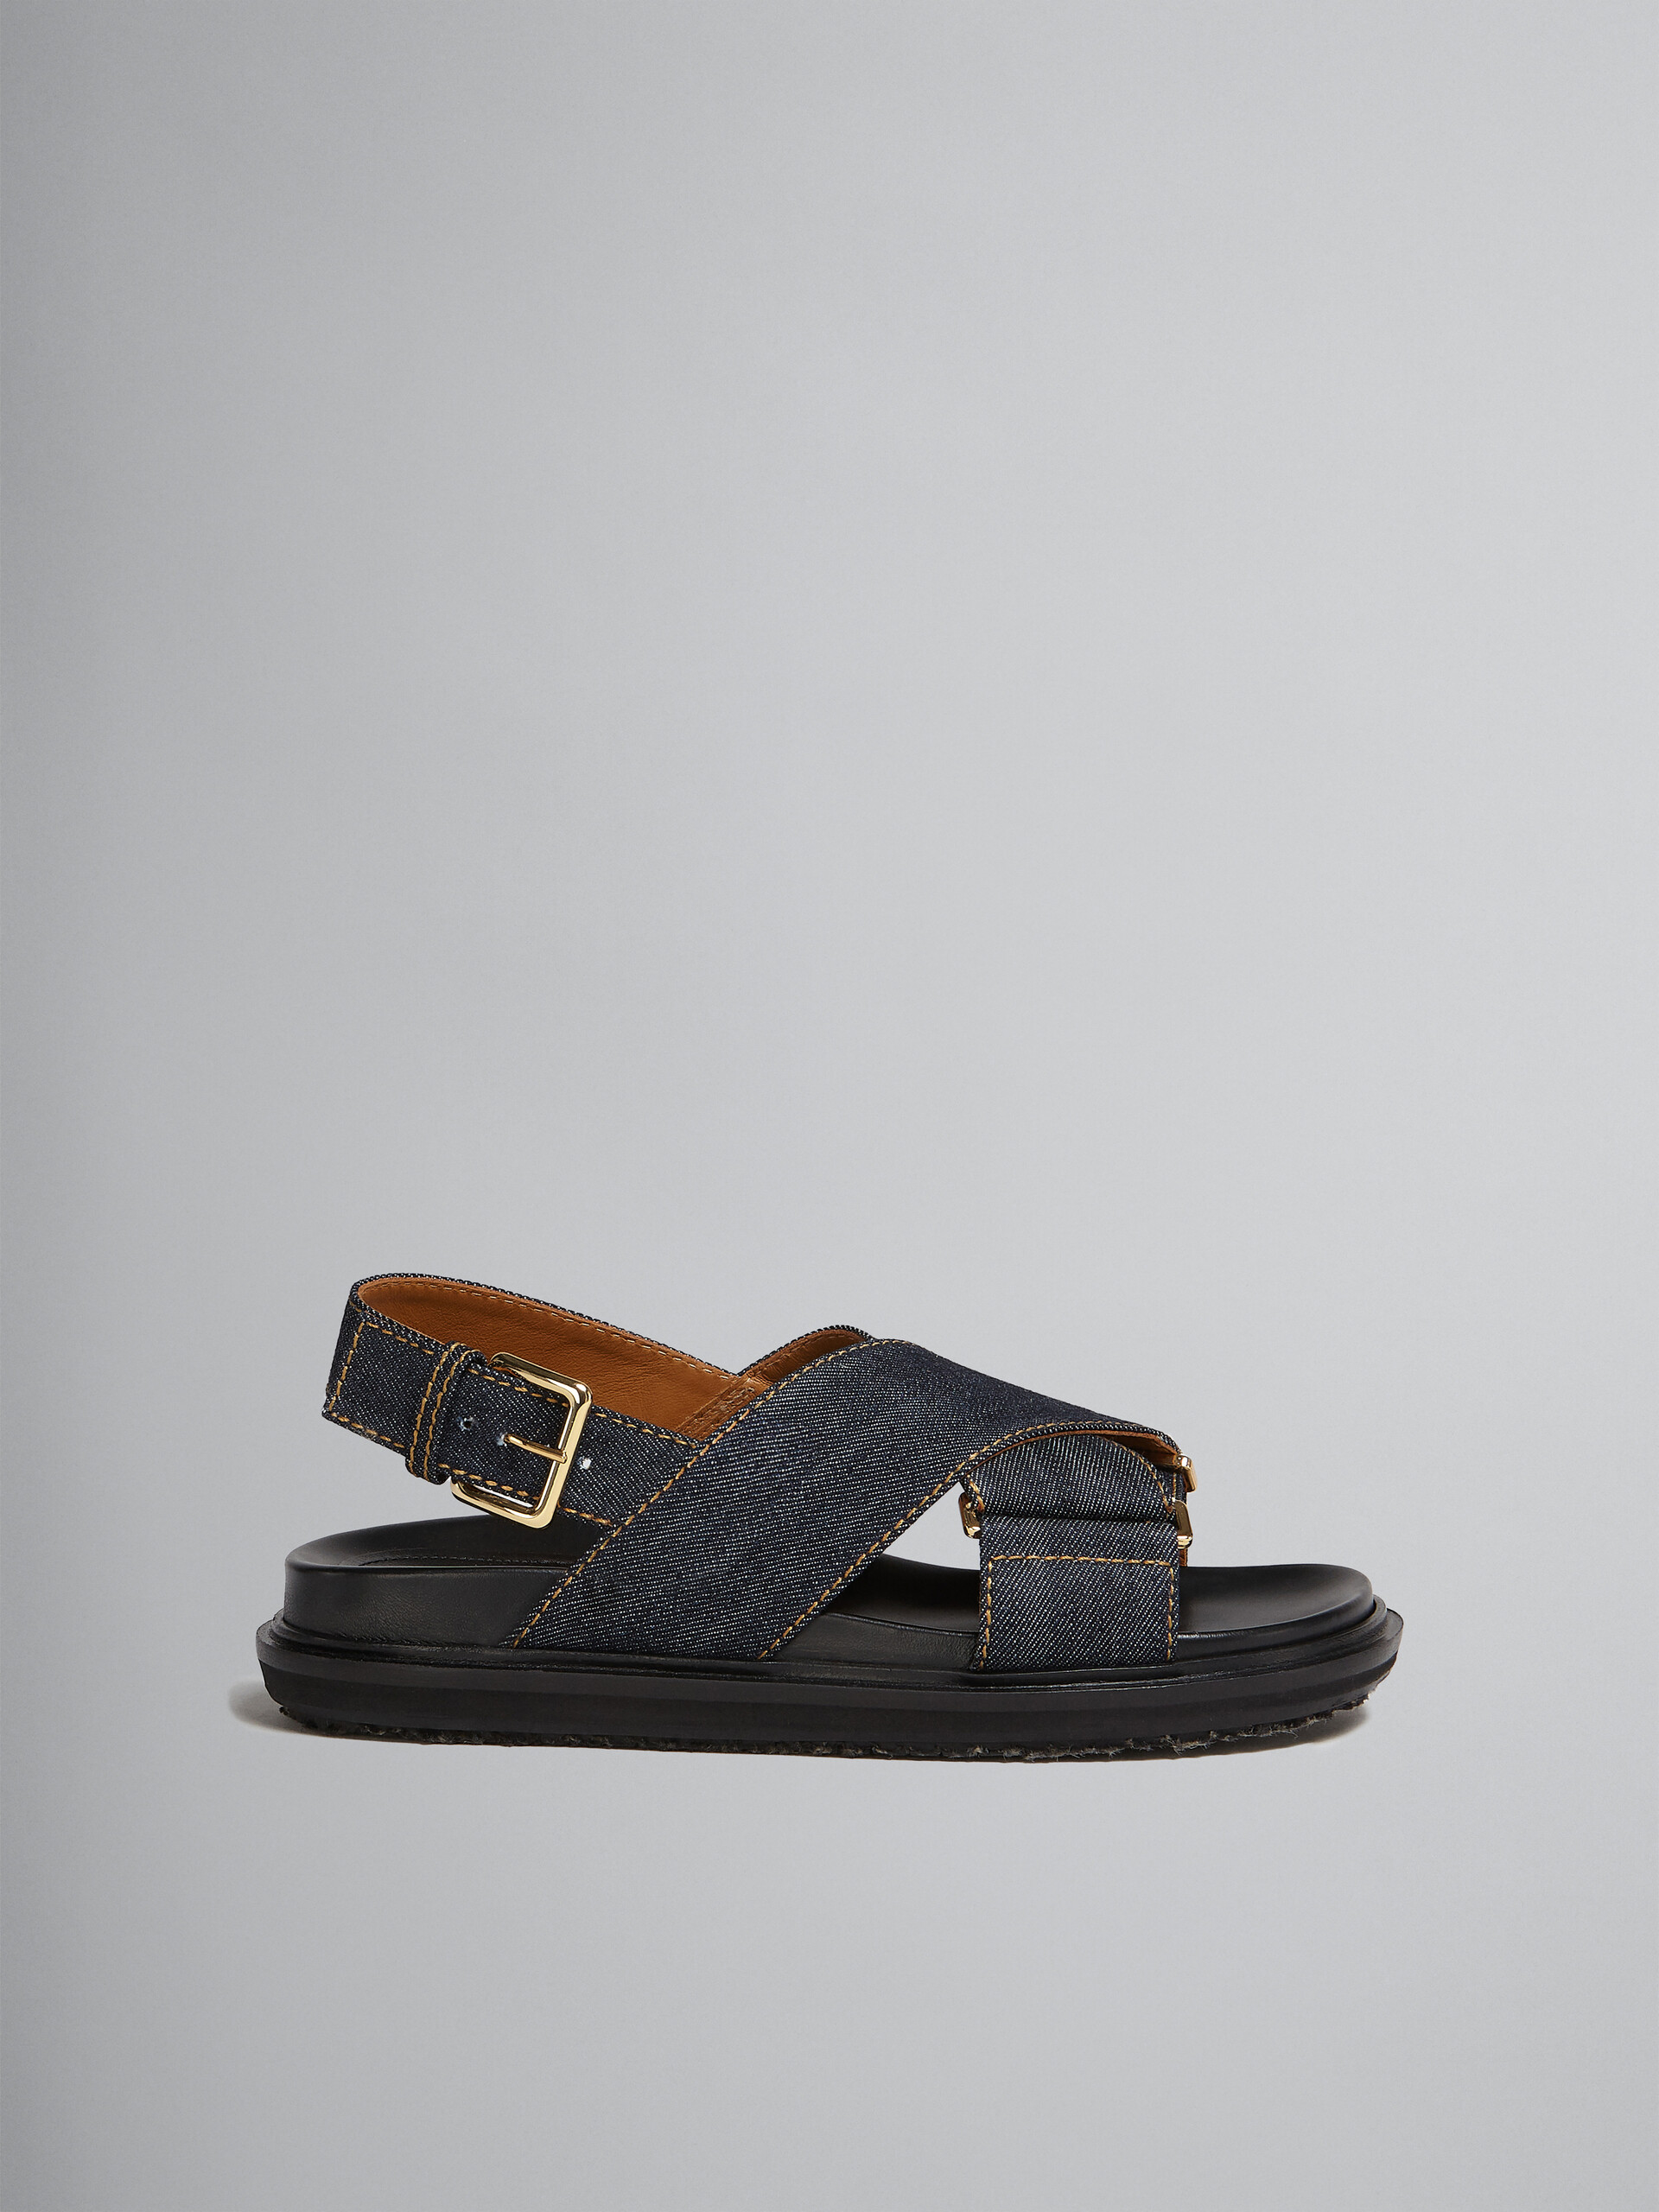 Blue denim criss-cross sandal - Sandals - Image 1